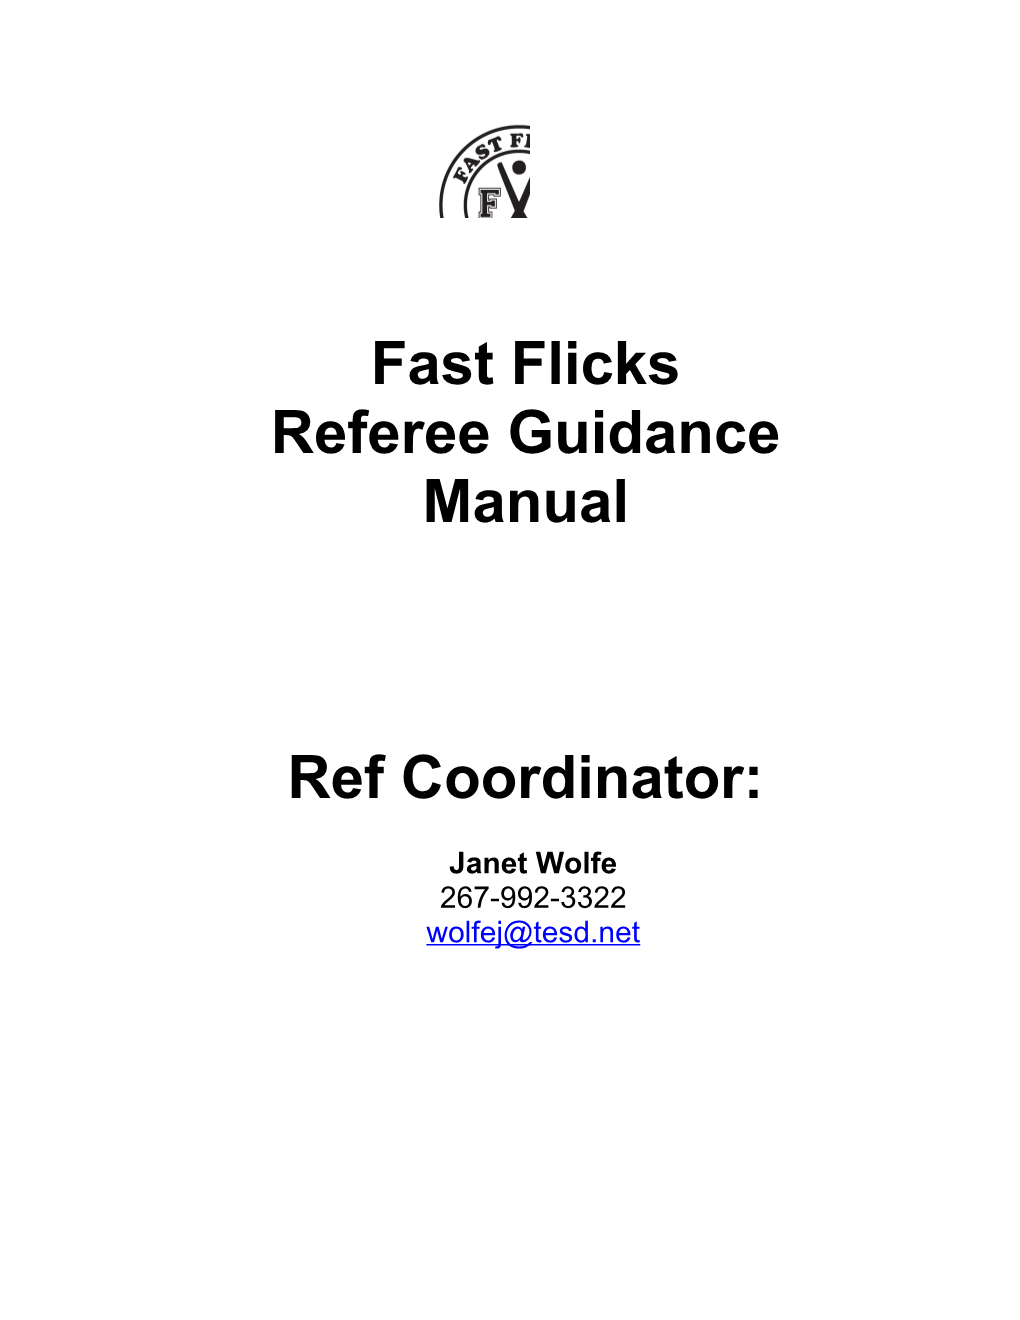 Referee Guidance Manual